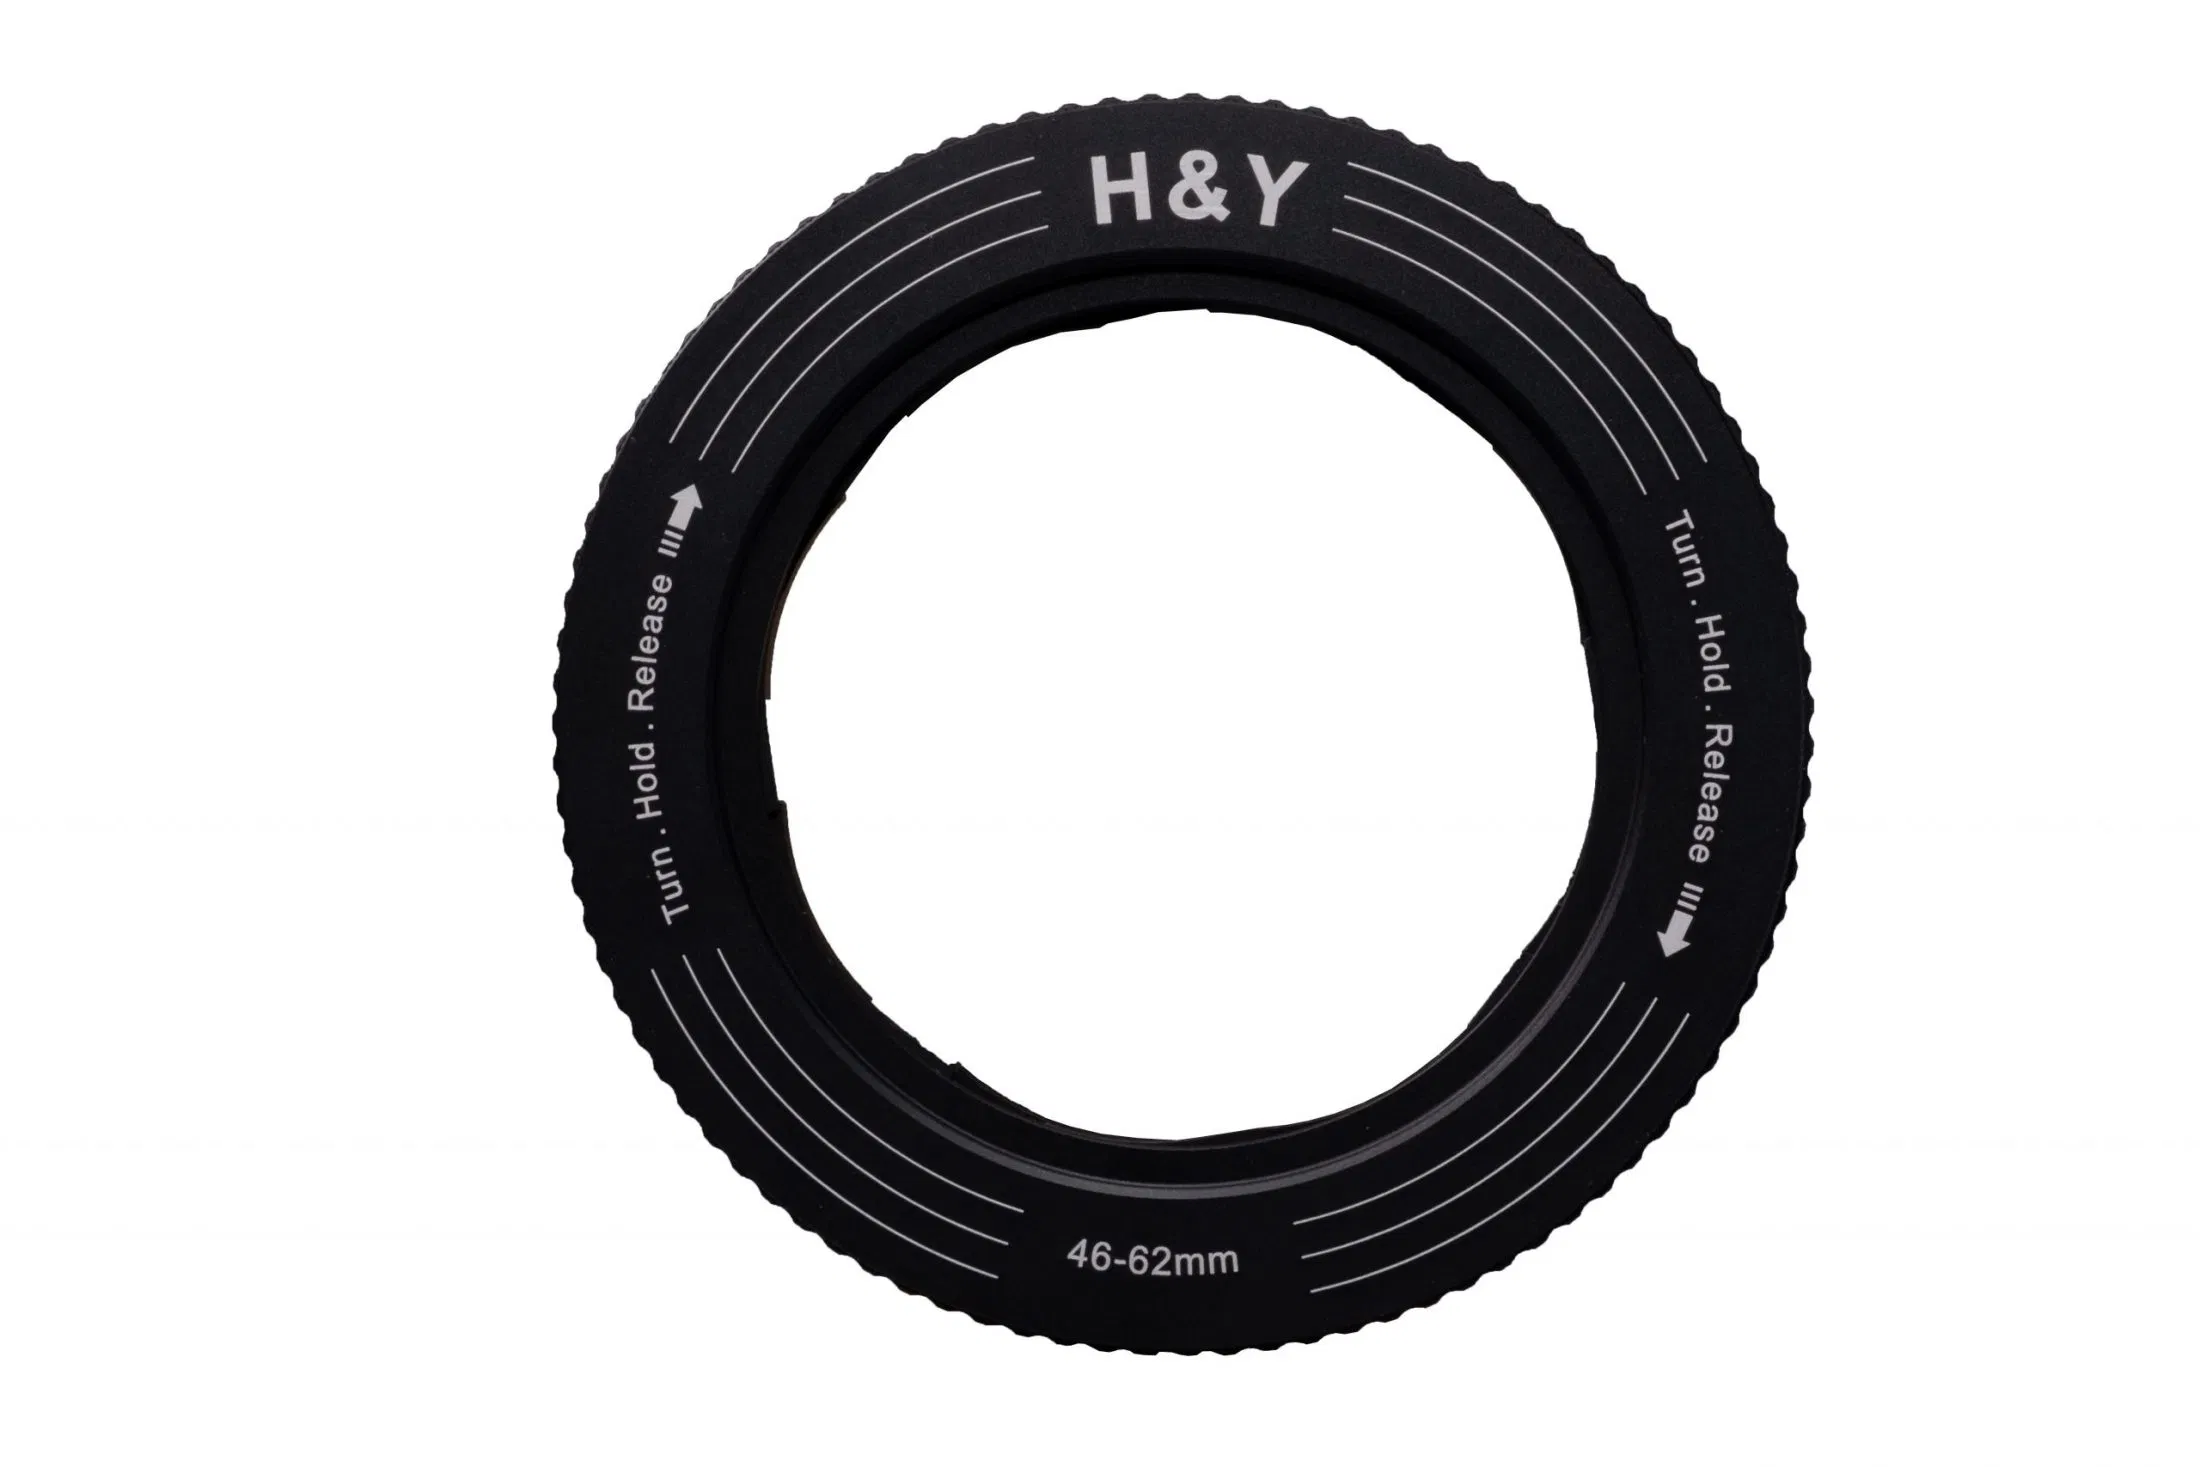 H&Y Filtri Revoring adattatore multiformato 52-72mm per filtri d